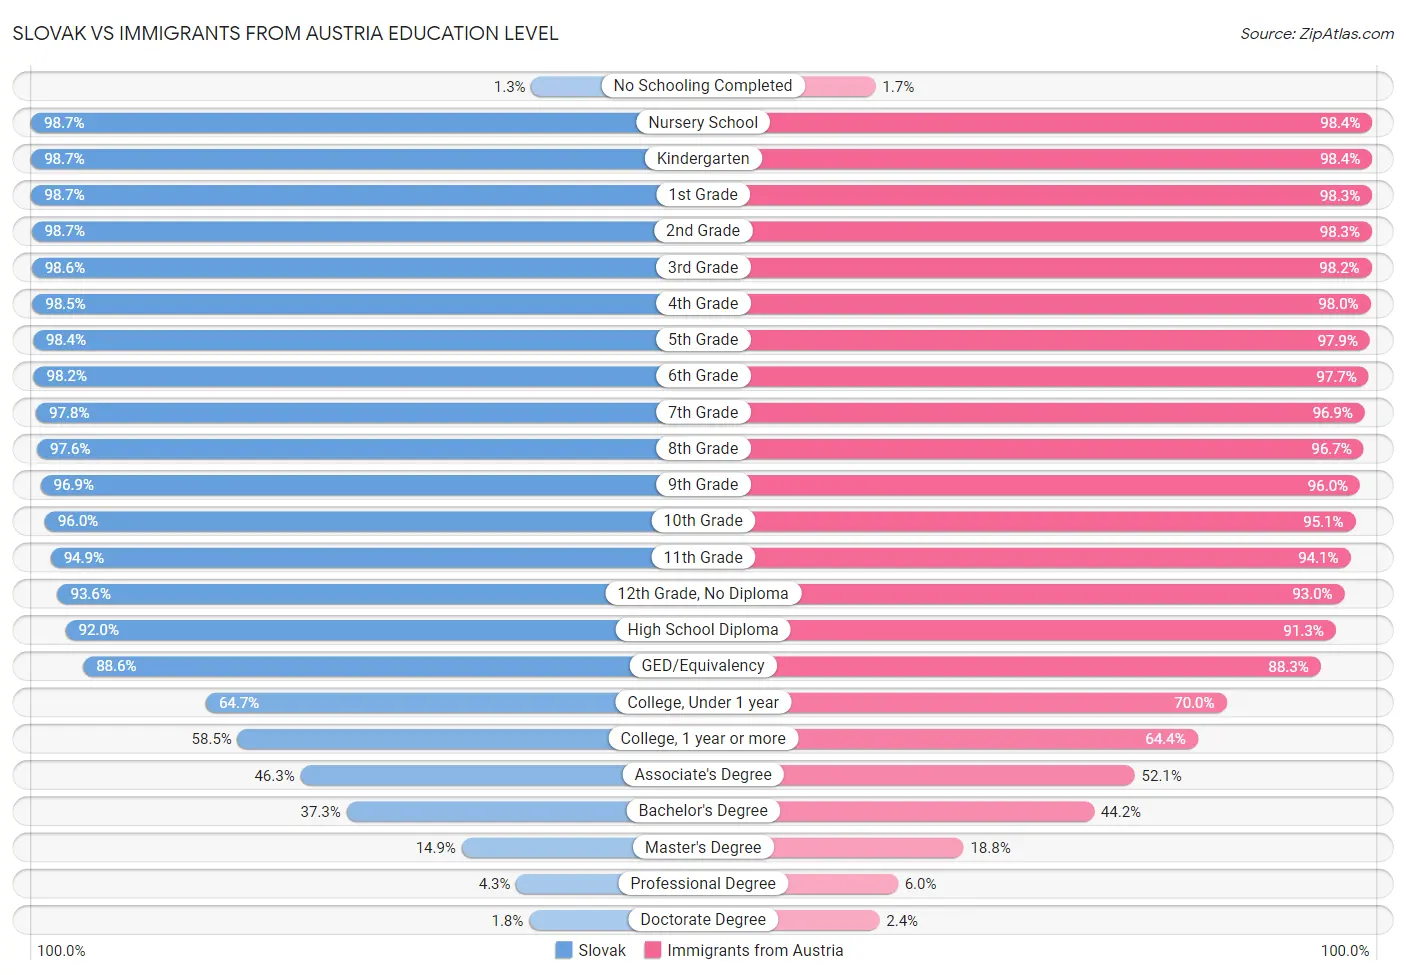 Slovak vs Immigrants from Austria Education Level